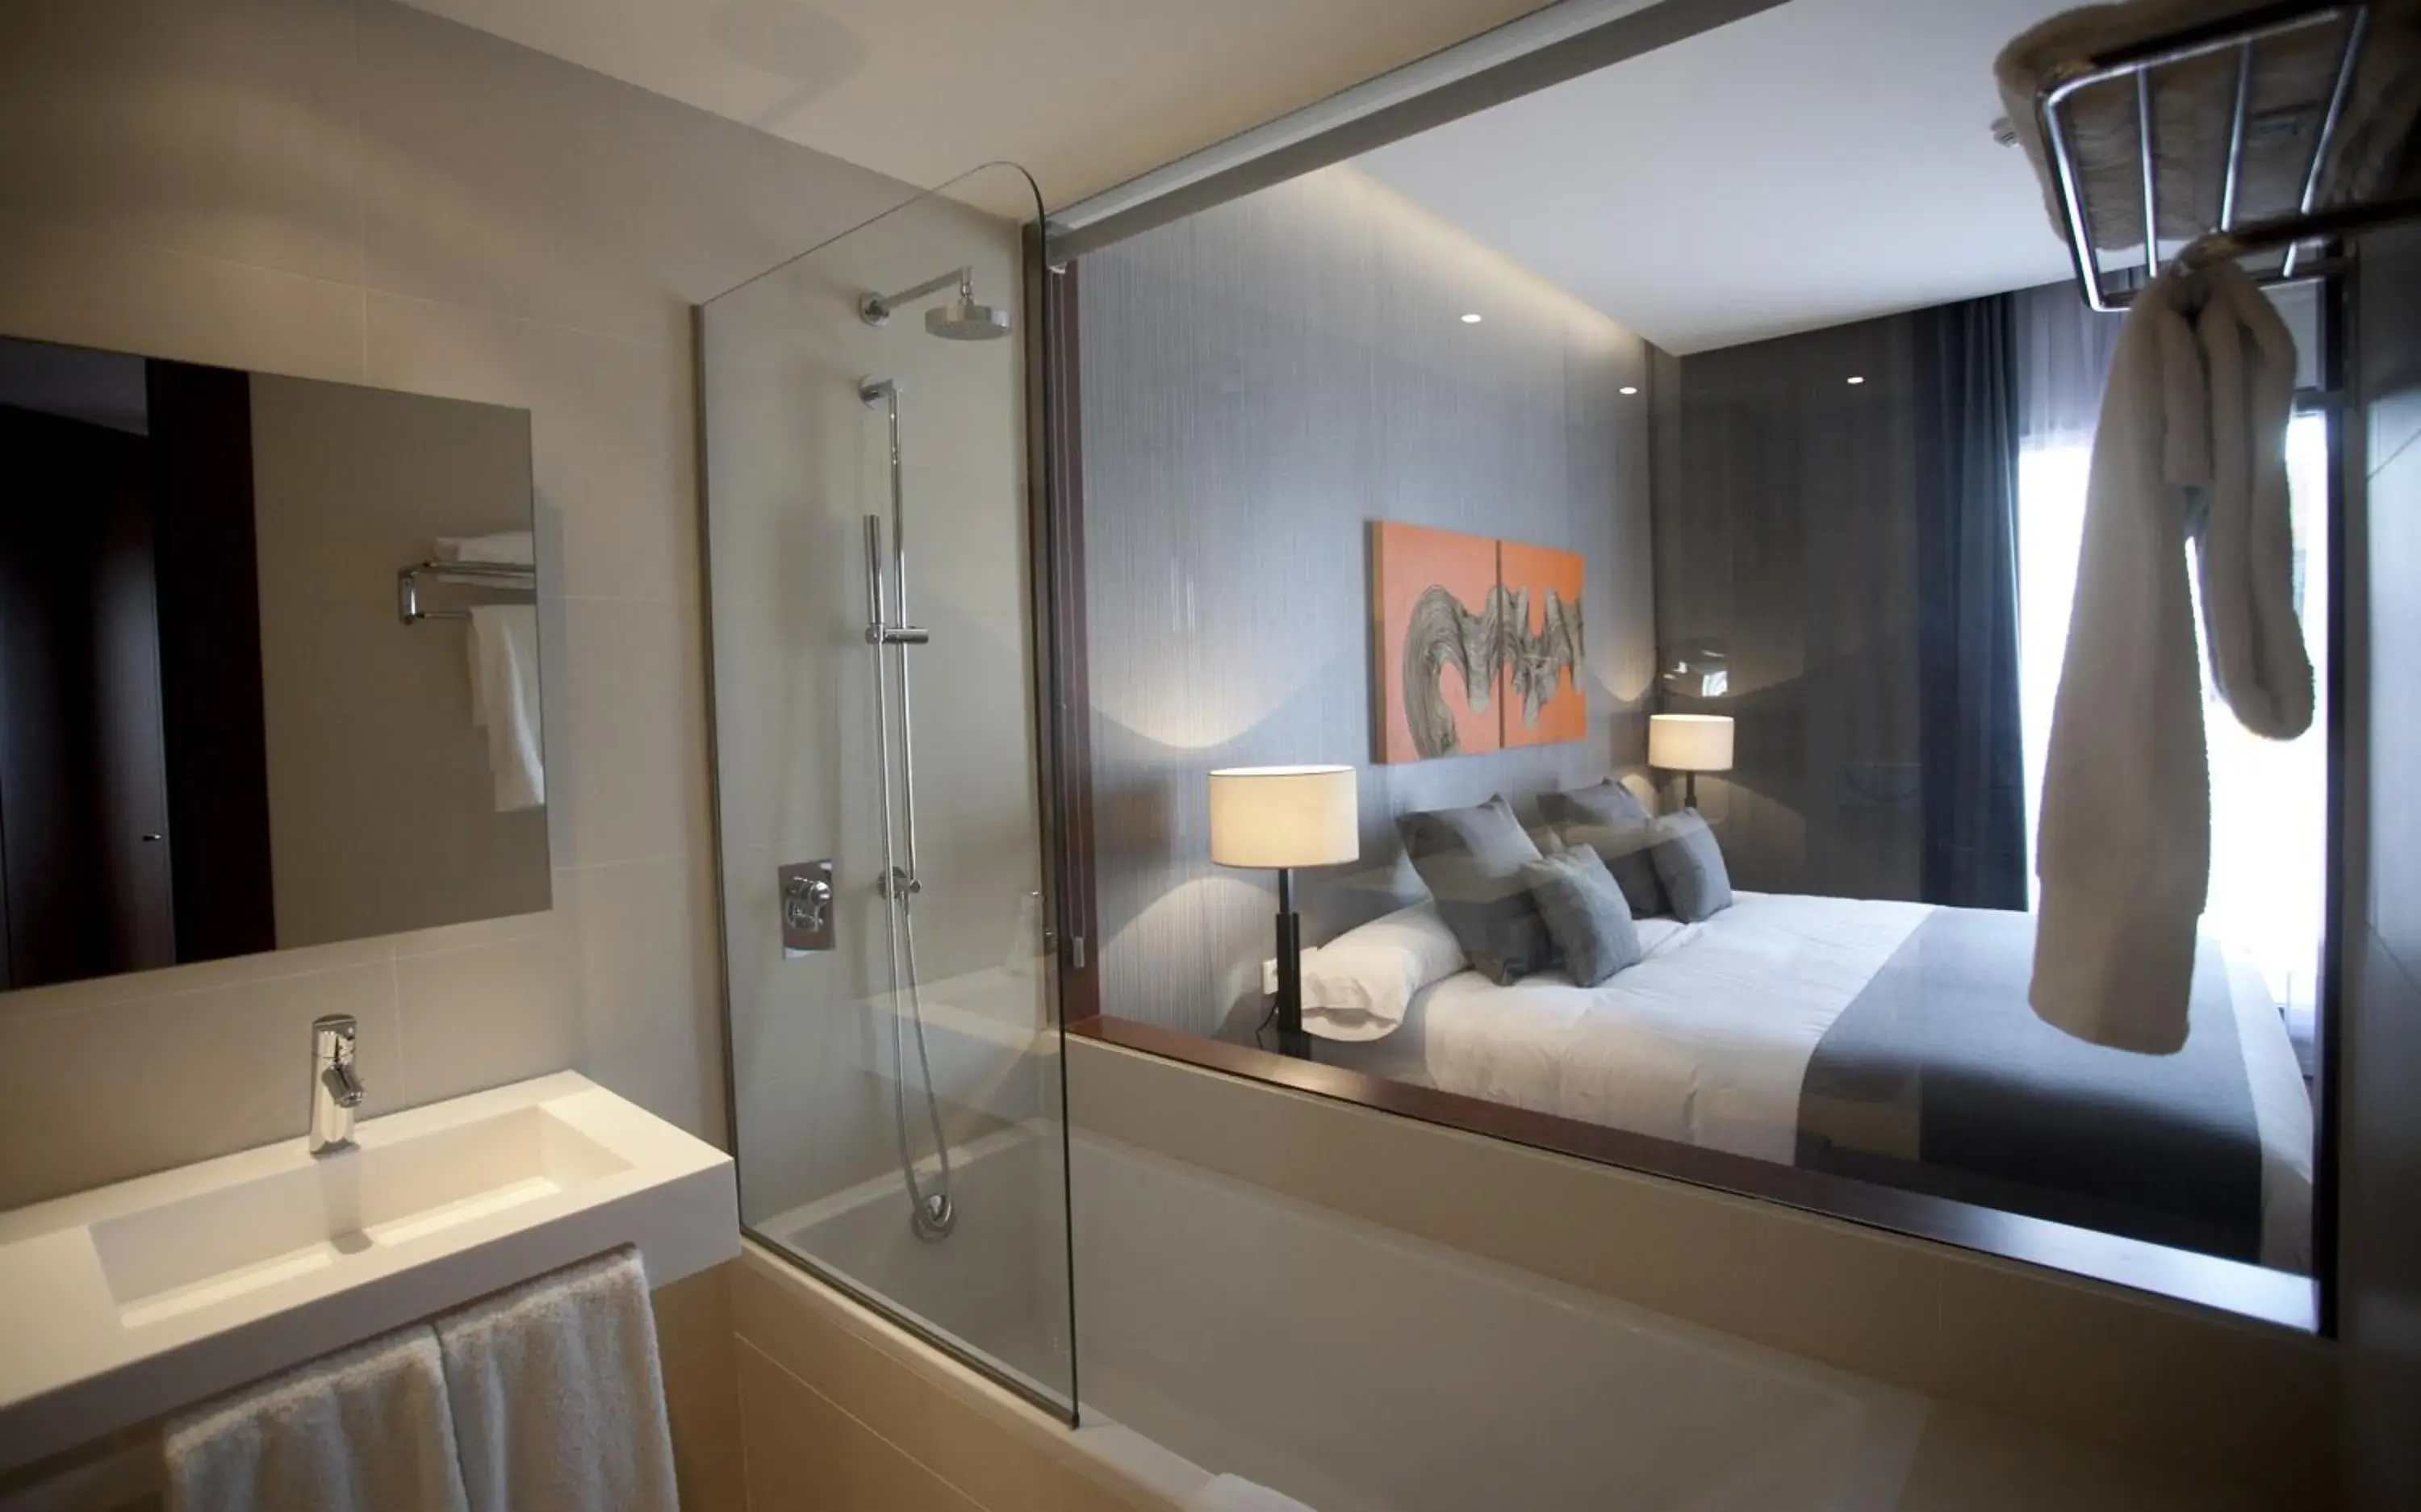 Photo of the whole room, Bathroom in Hotel Carris Marineda